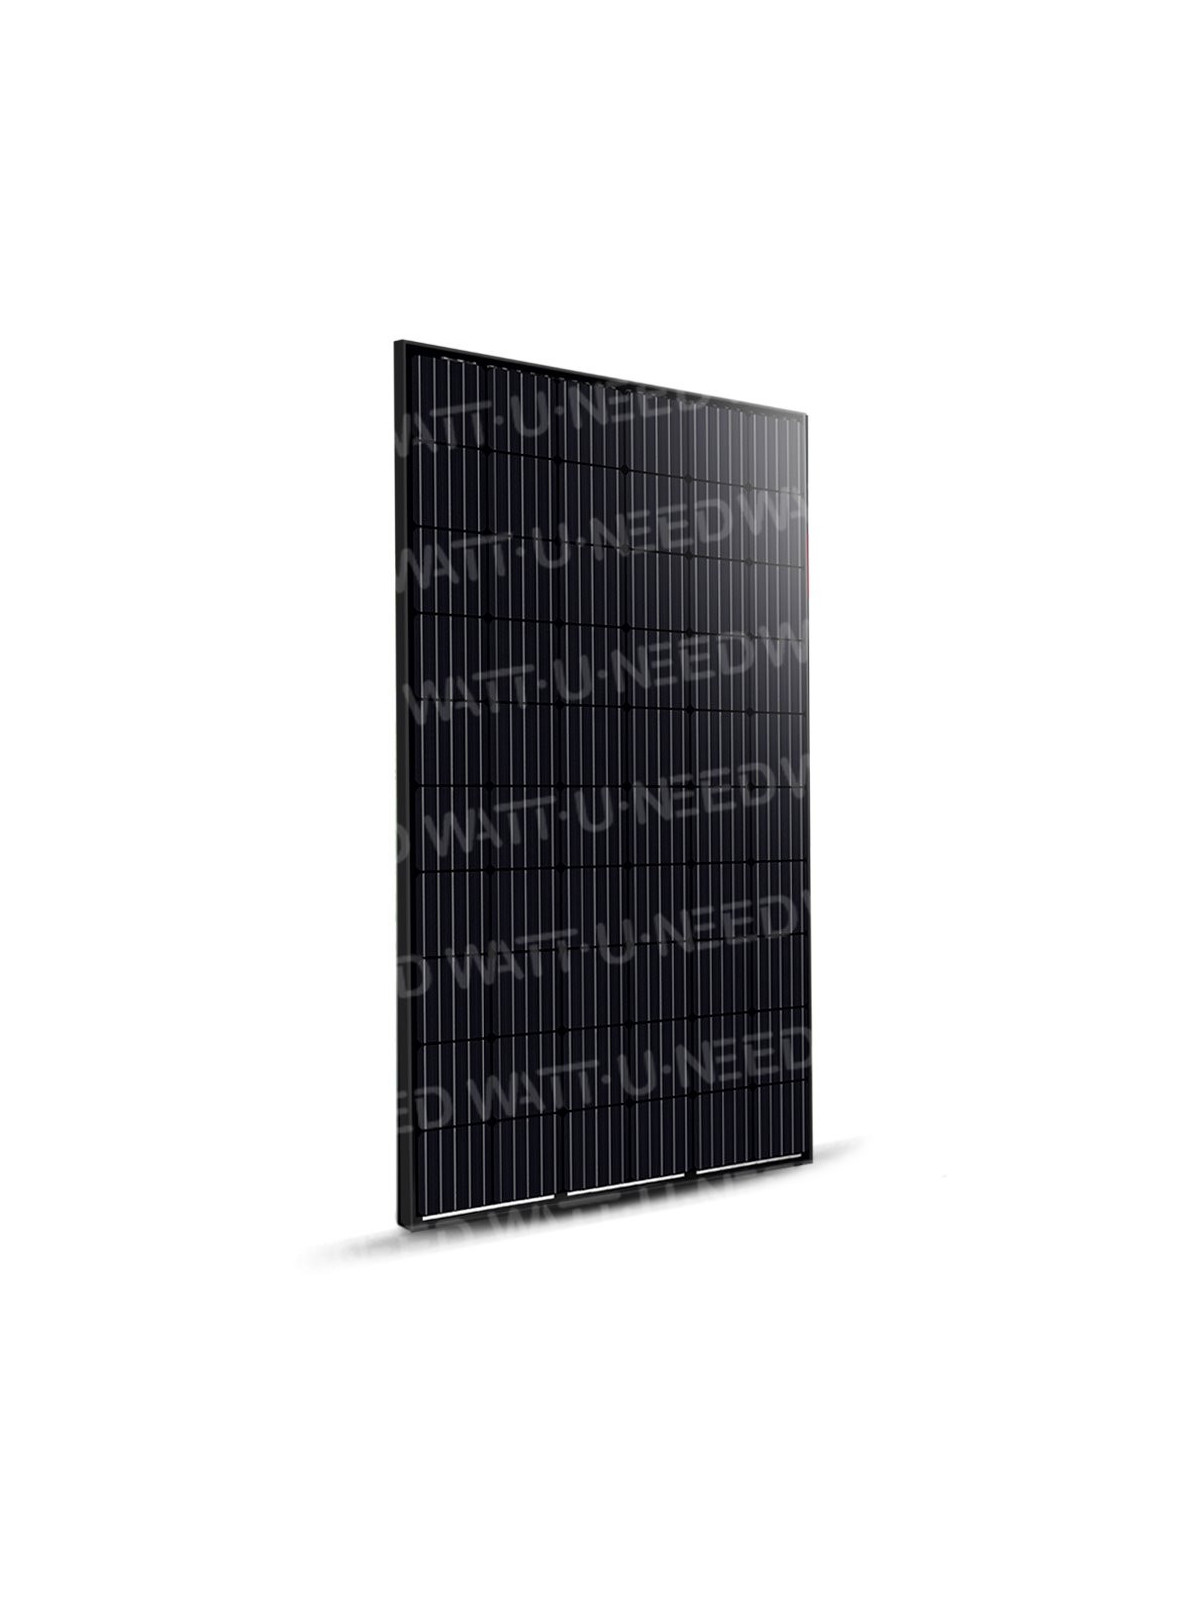 Self-consumption Kit 9 solar panels 5kVA lithium